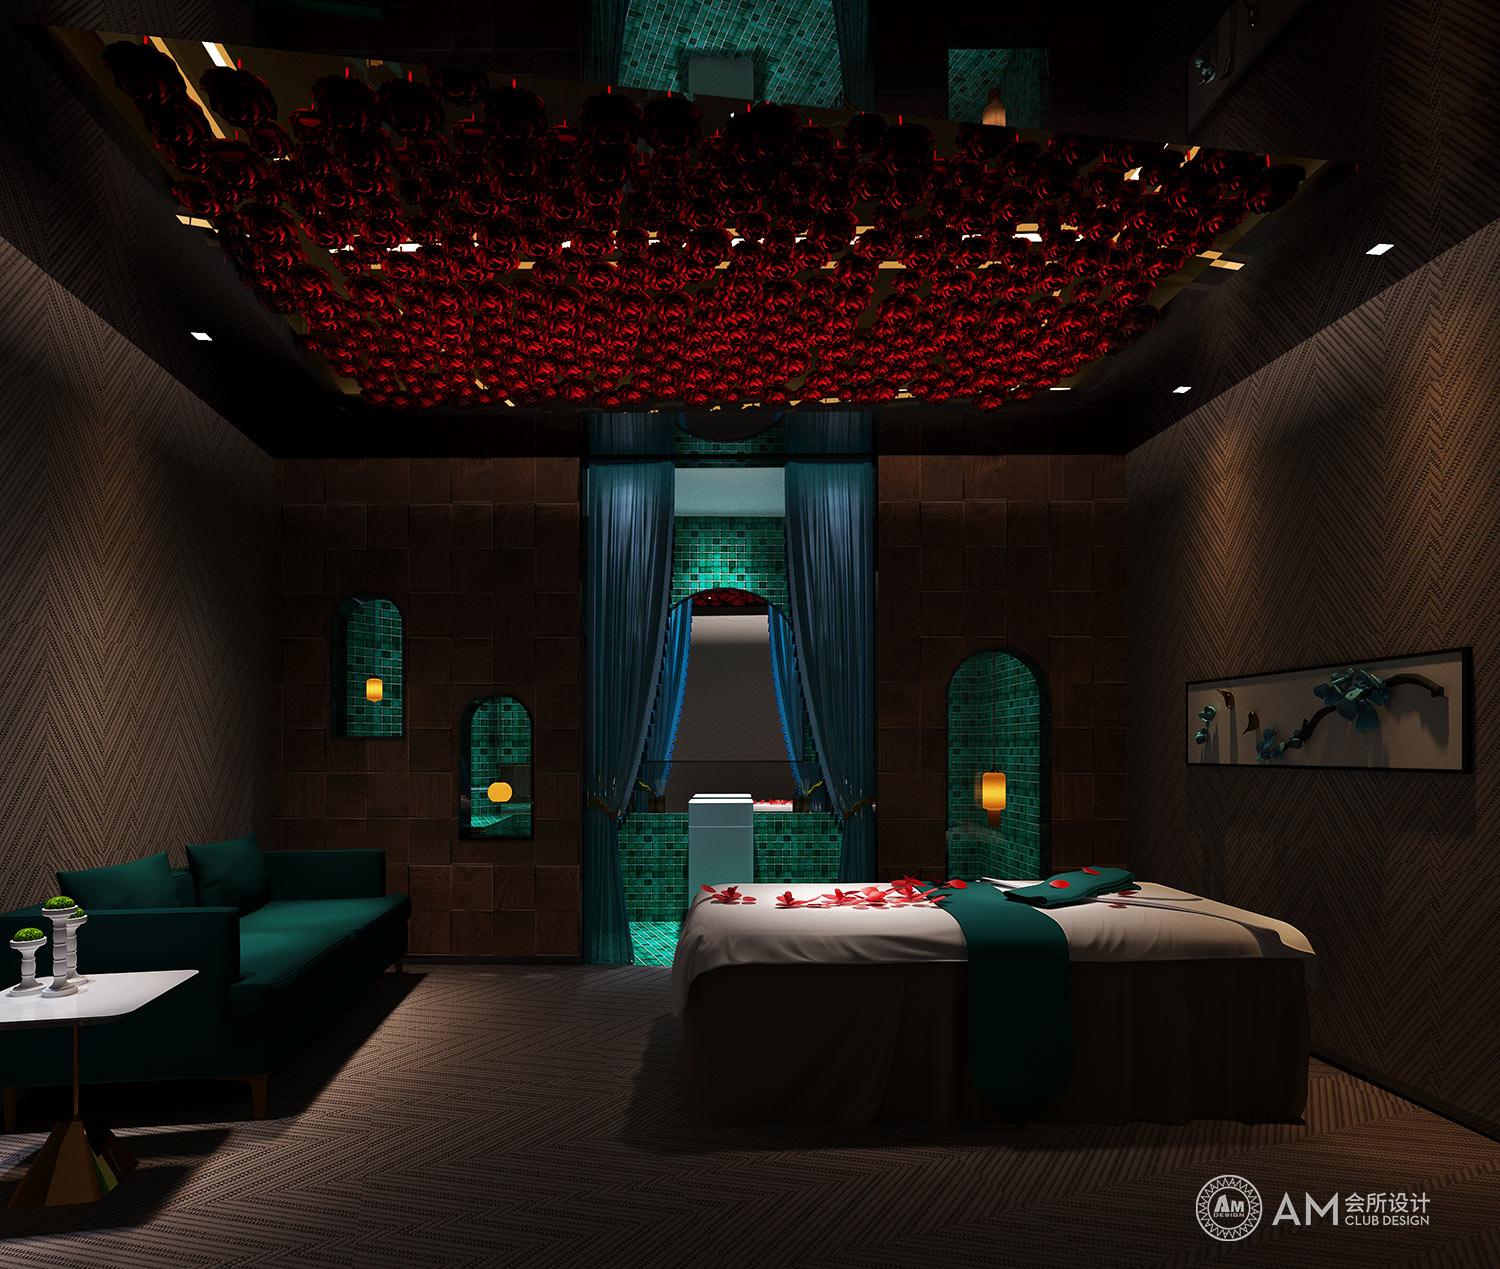 AM DESIGN | Spa room design of men's spa club in Suzhou